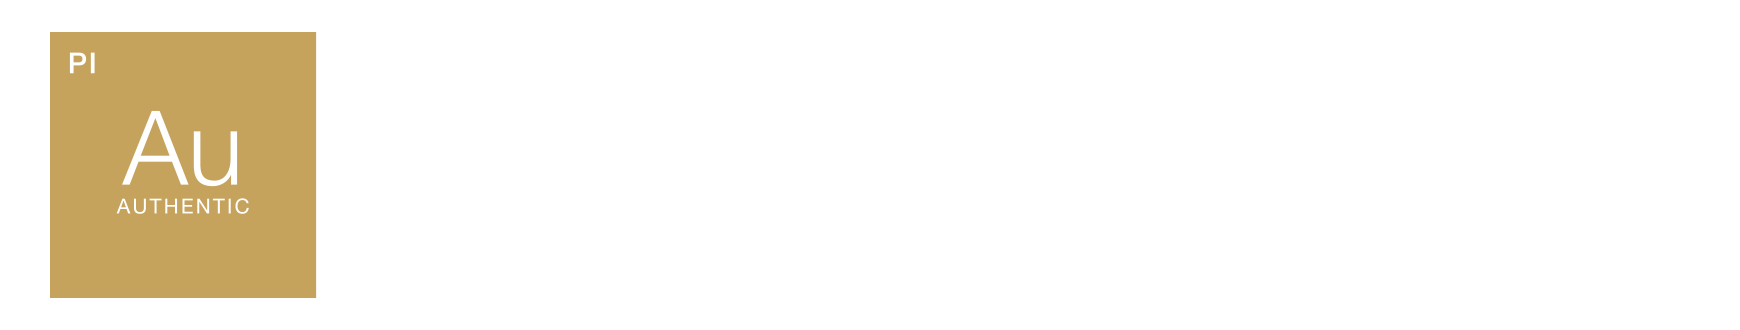 Phoenix Innovate's Authentic Marketing logo